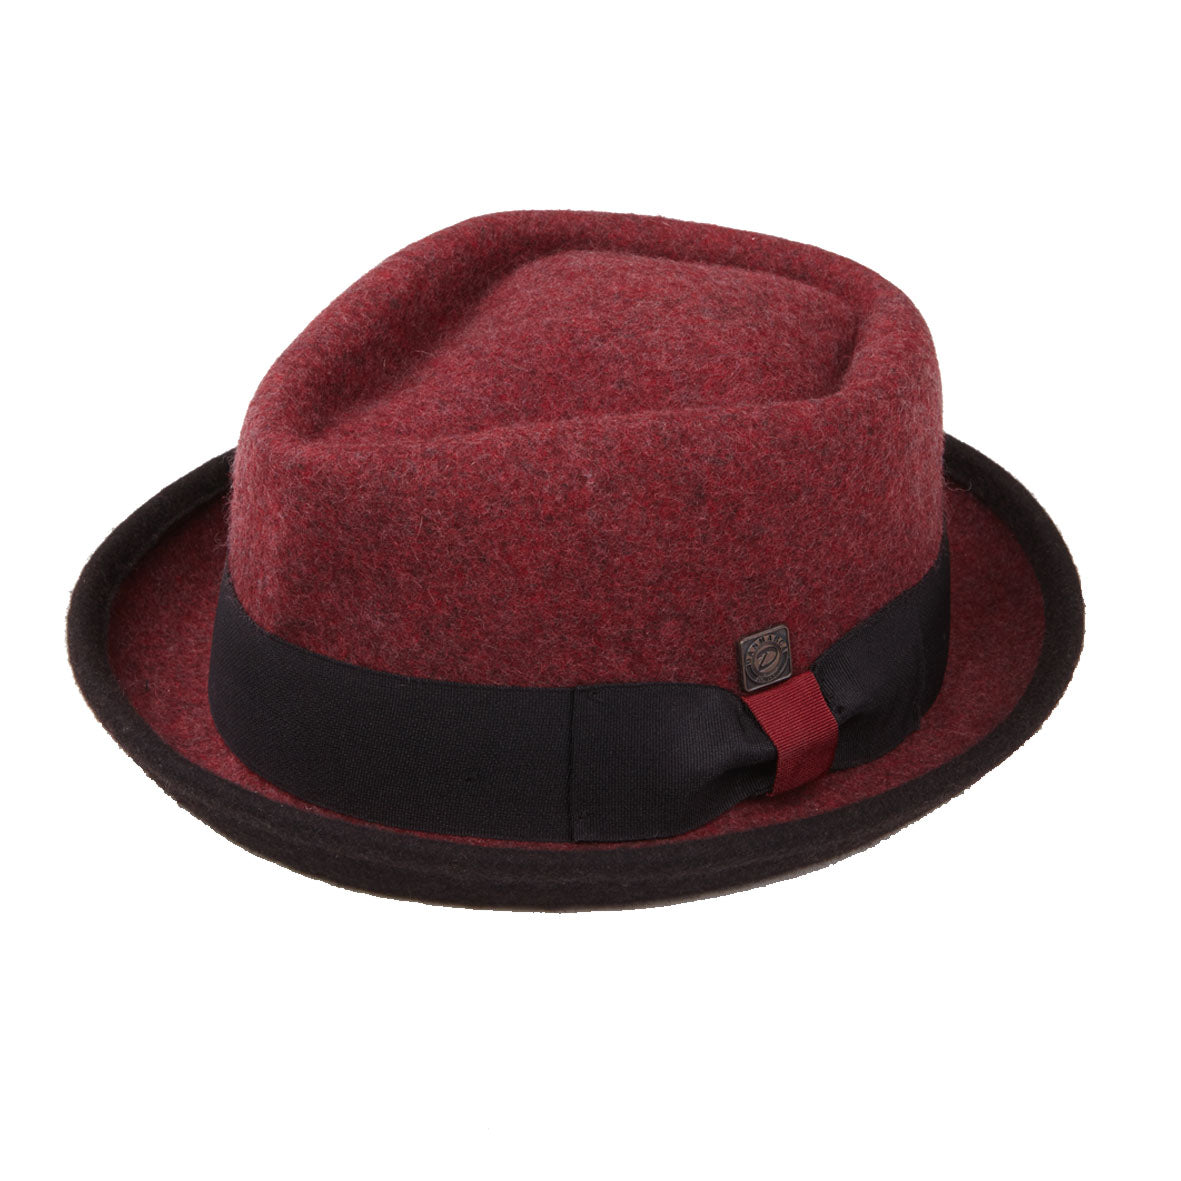 Dasmarca Hats Men's Red Jackson Burgundy Wool Felt Two Tone Porkpie Hat